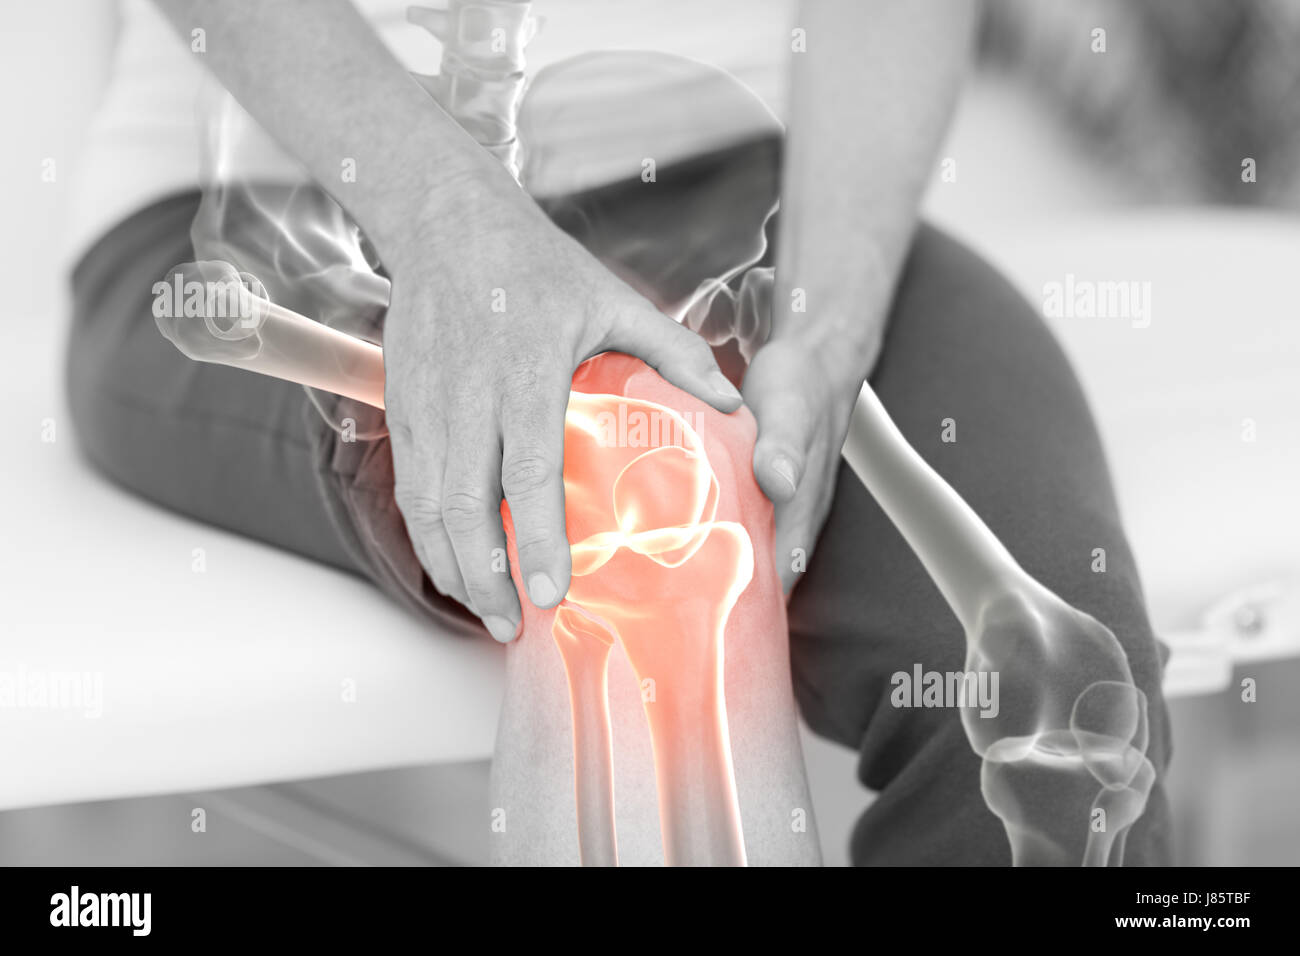 Digitally generated image of man holding sore knee Stock Photo